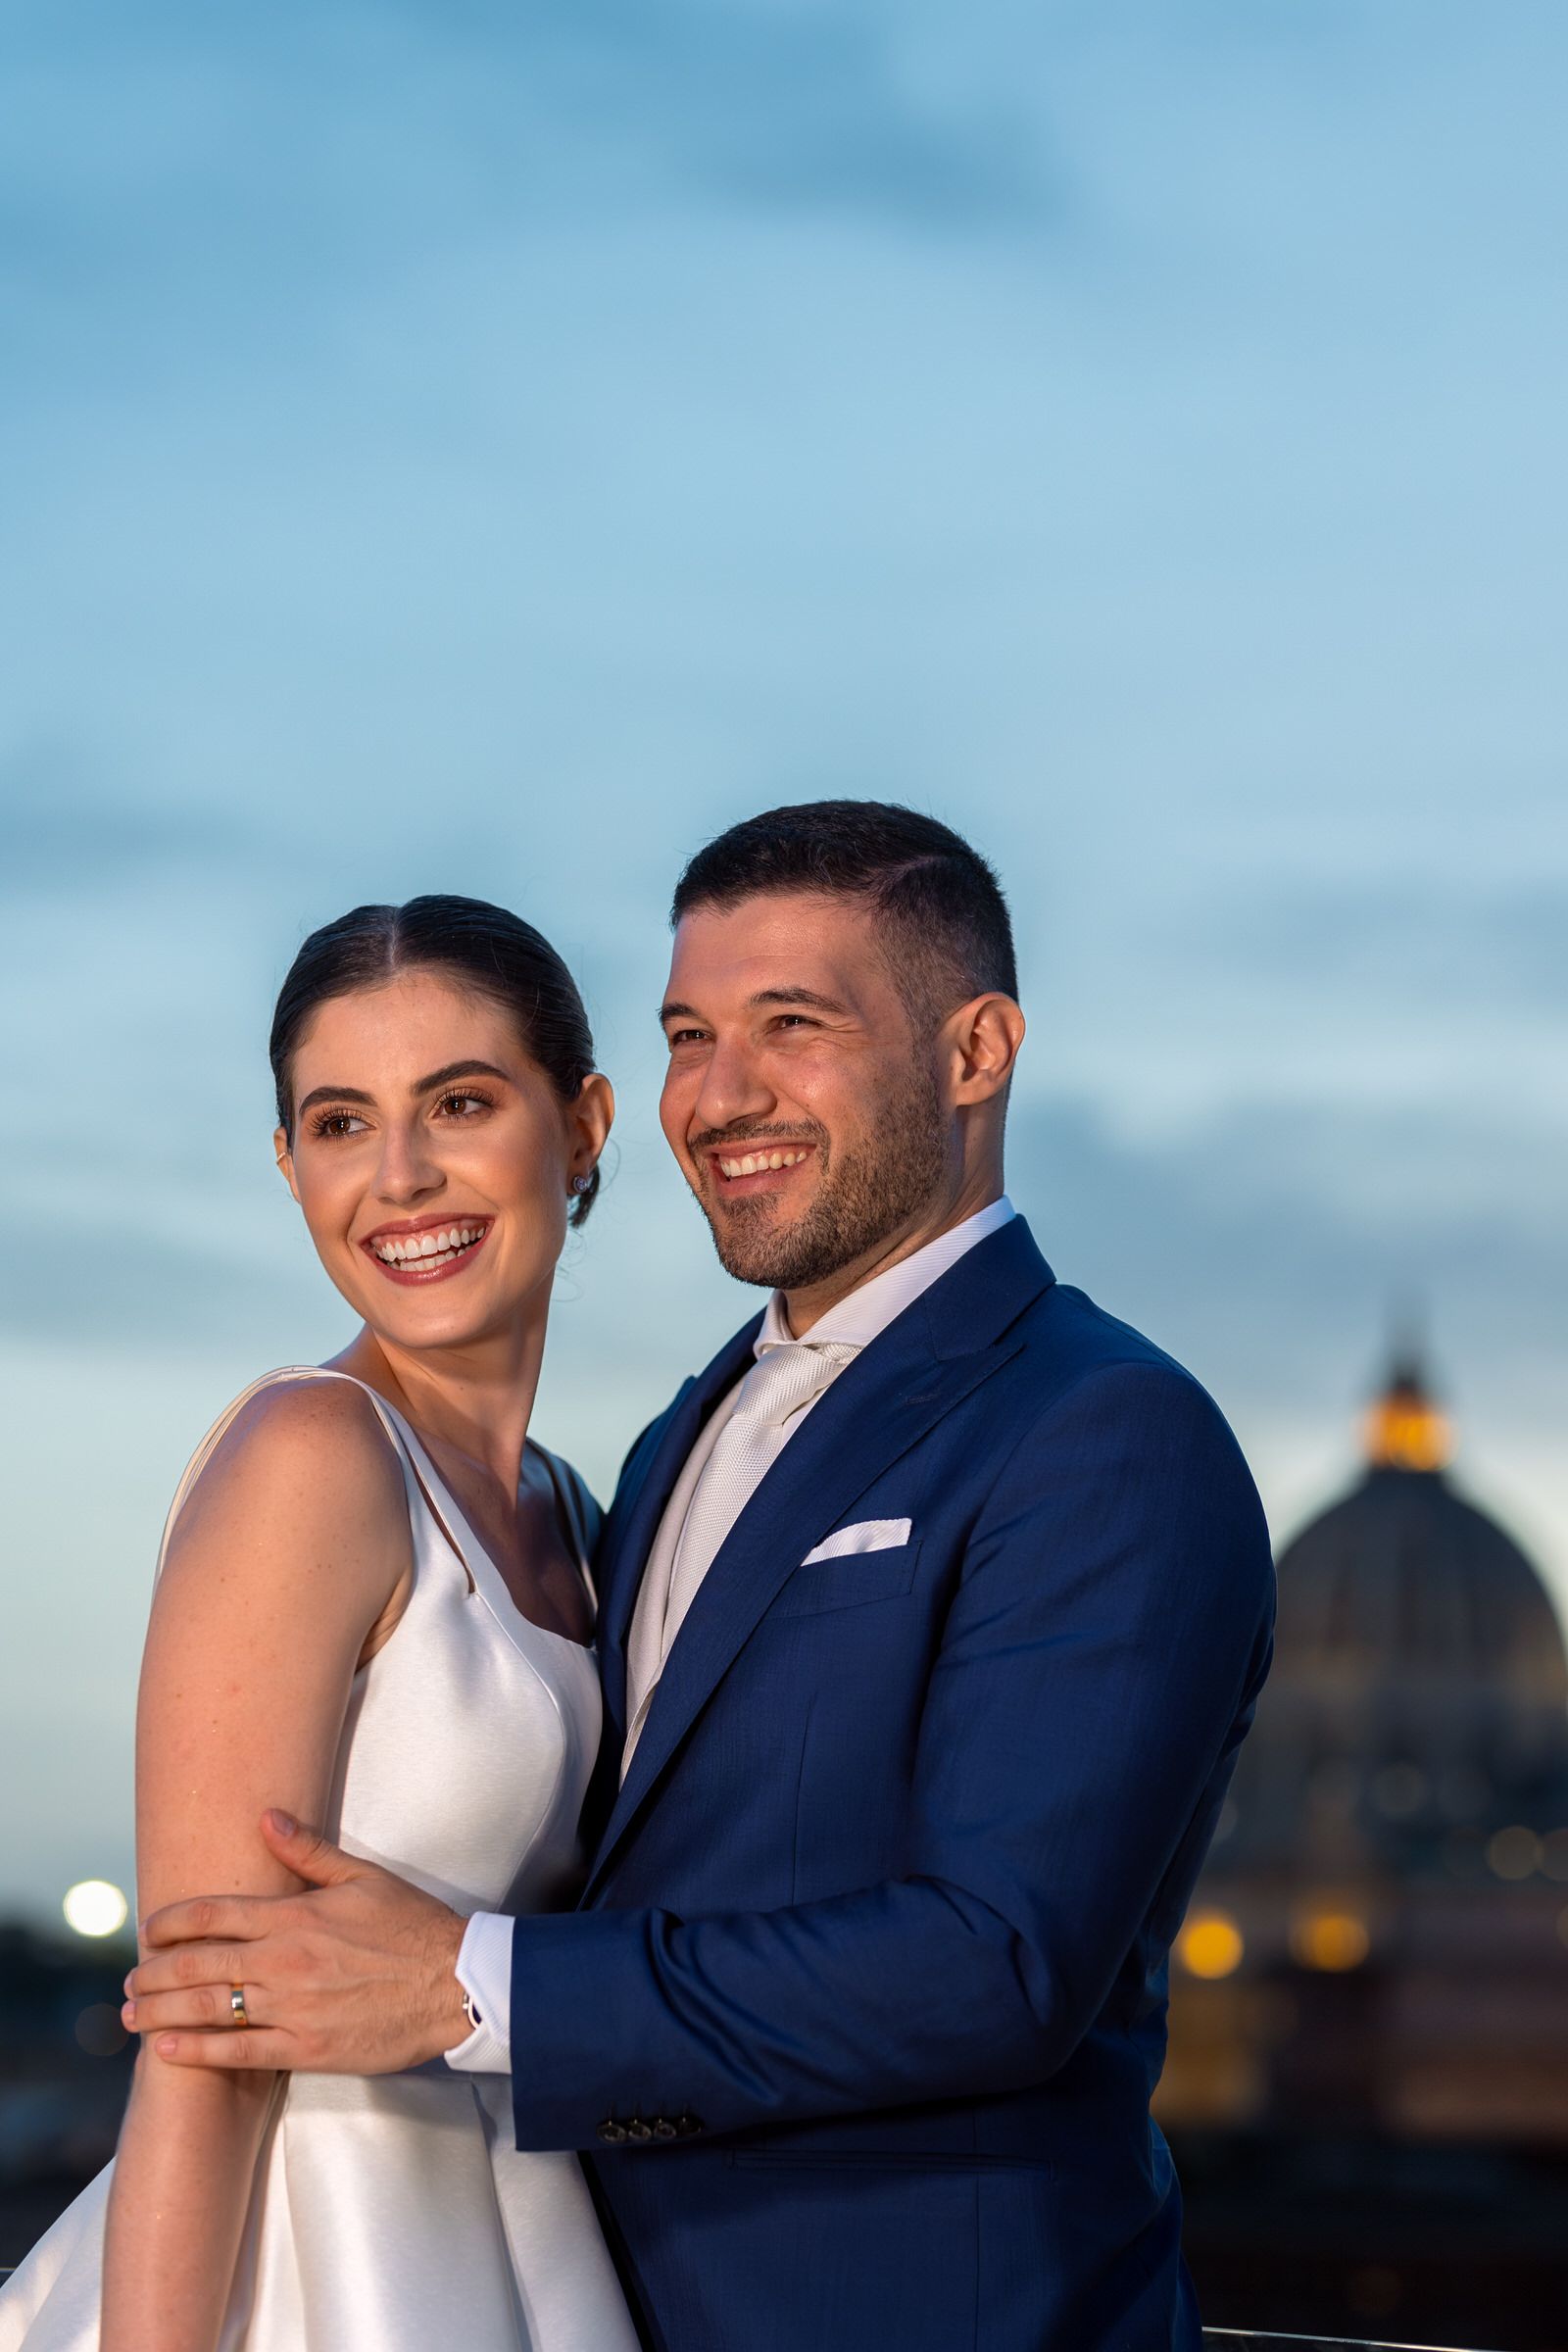 Casar em Roma